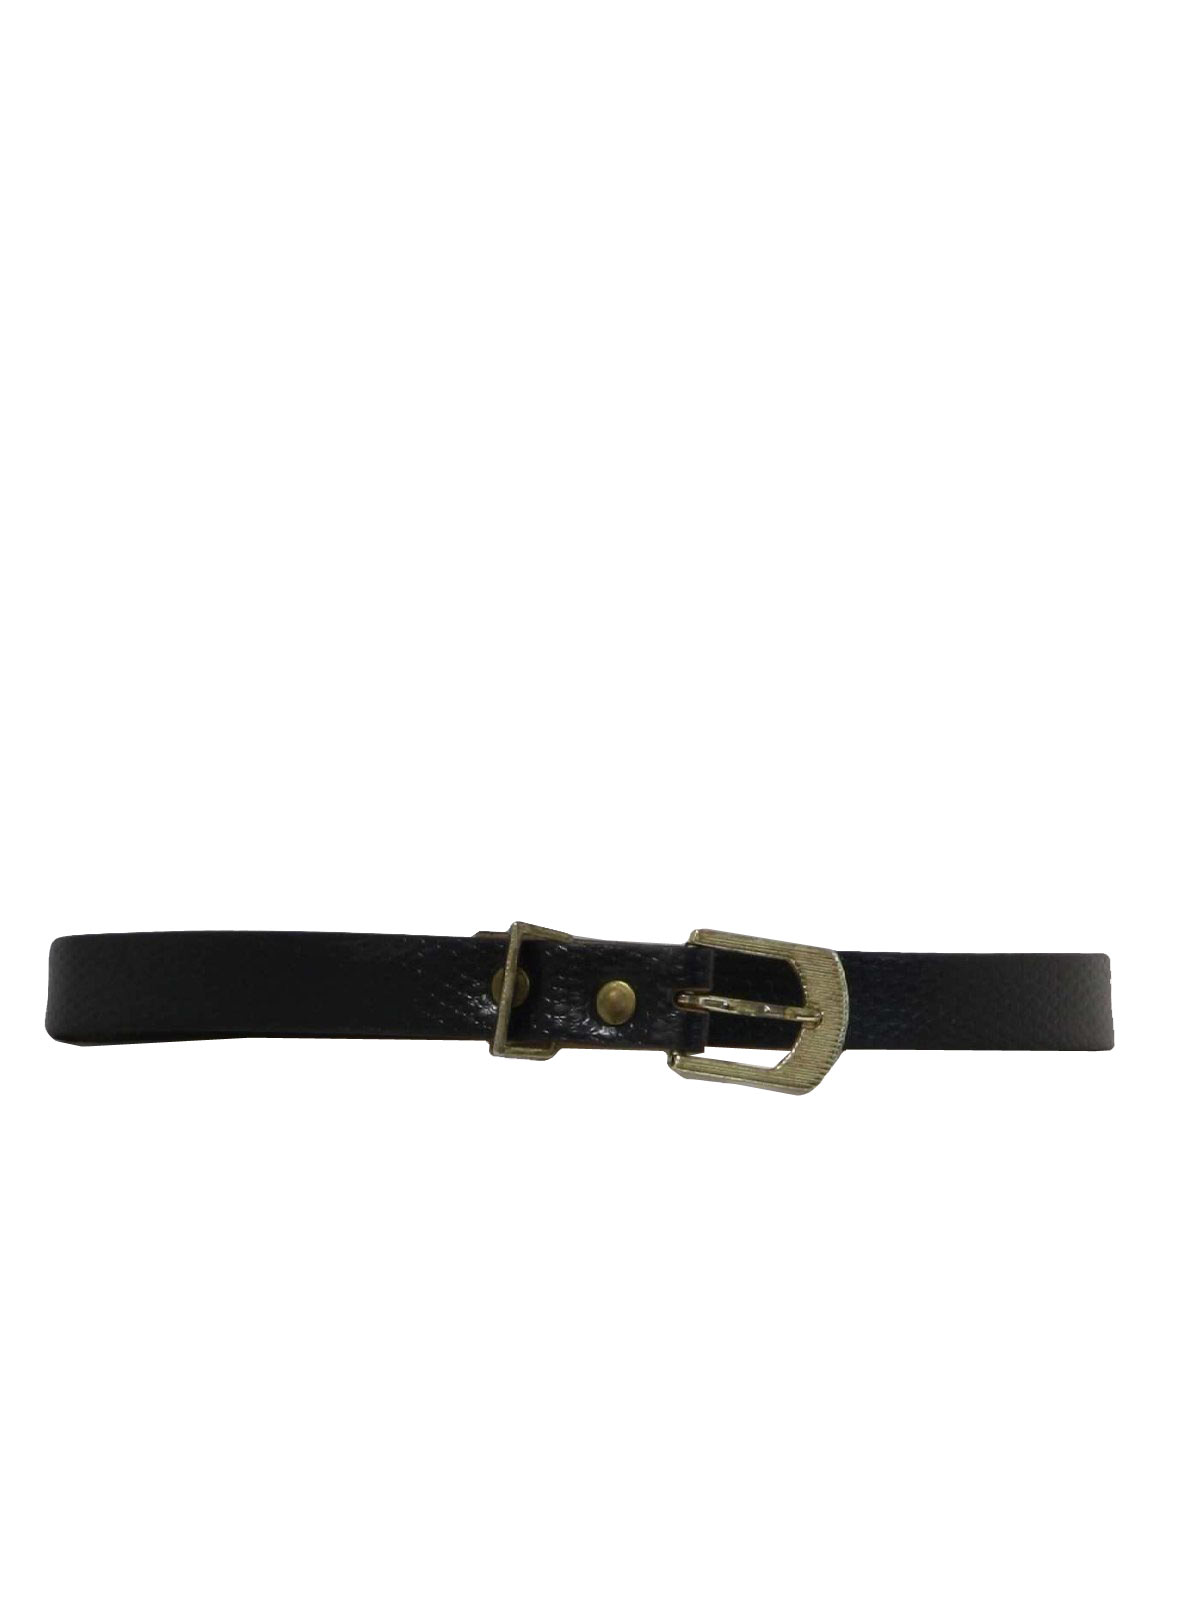 thin leather belt mens